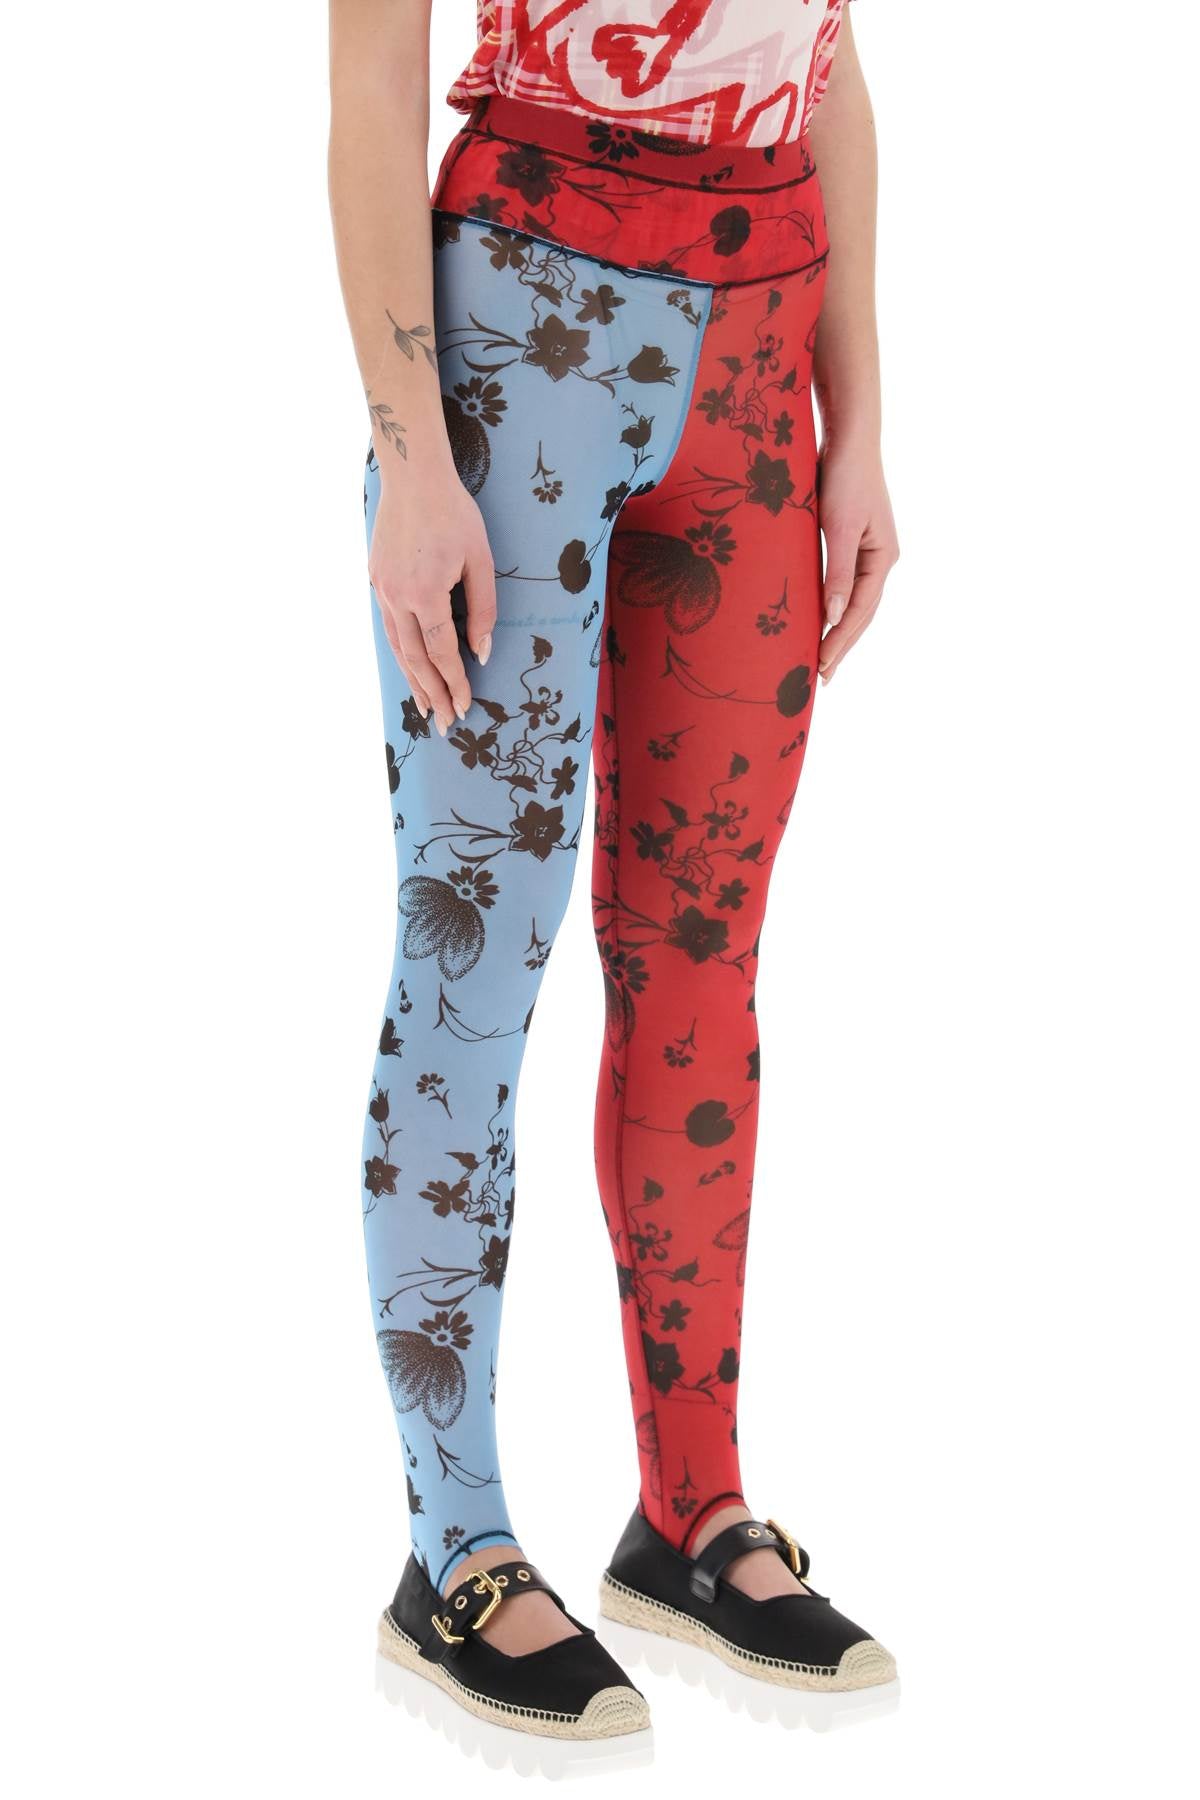 Chopova lowena color-block floral leggings-1